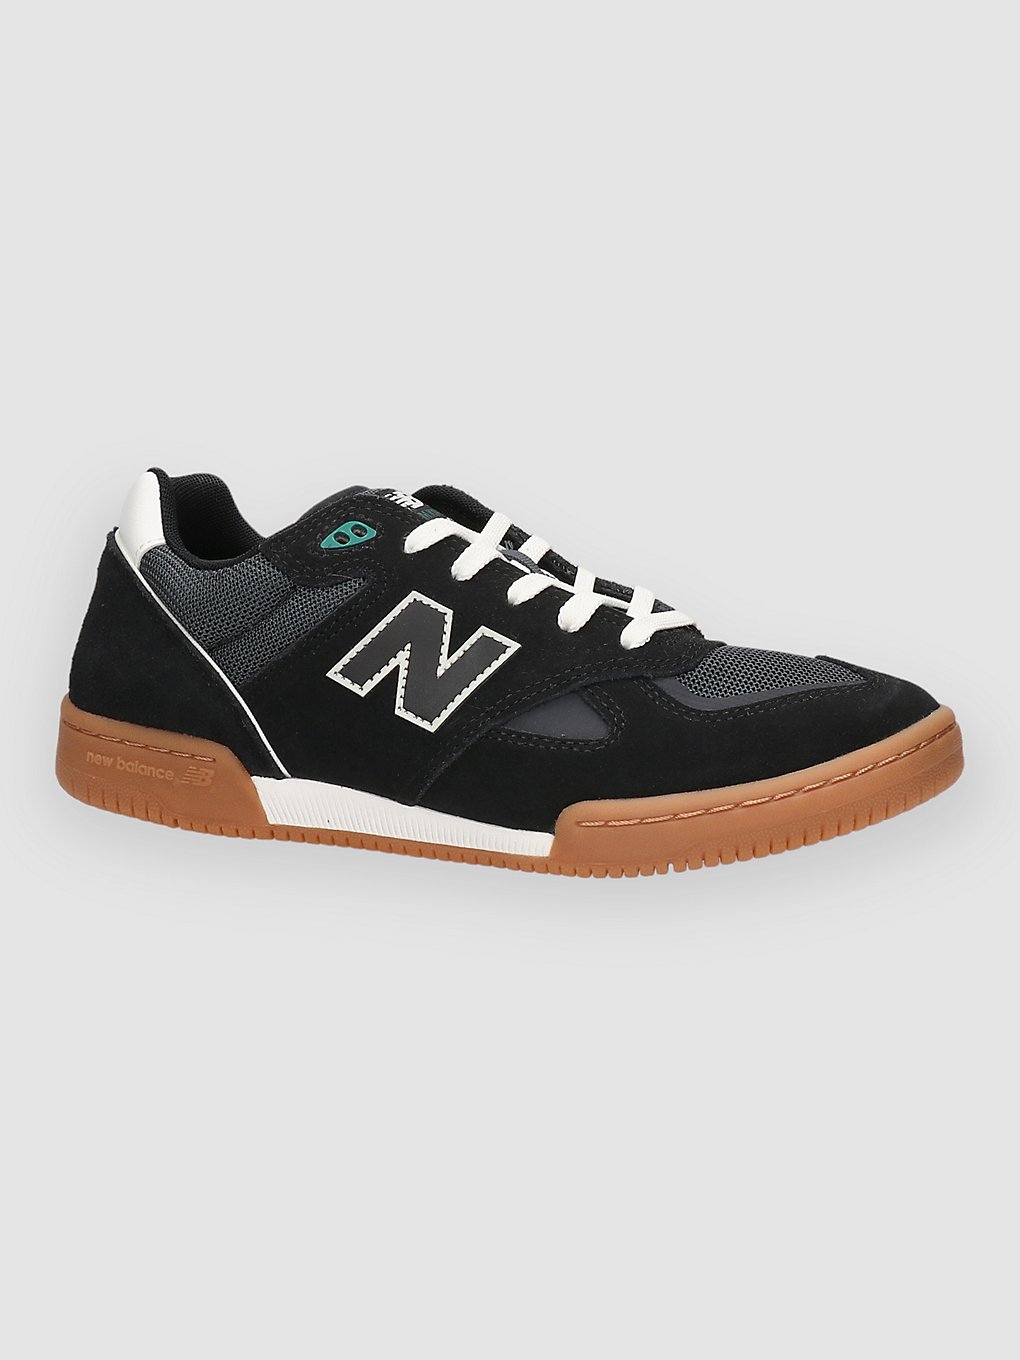 New Balance Numeric 600 Tom Knox Skateschuhe black kaufen